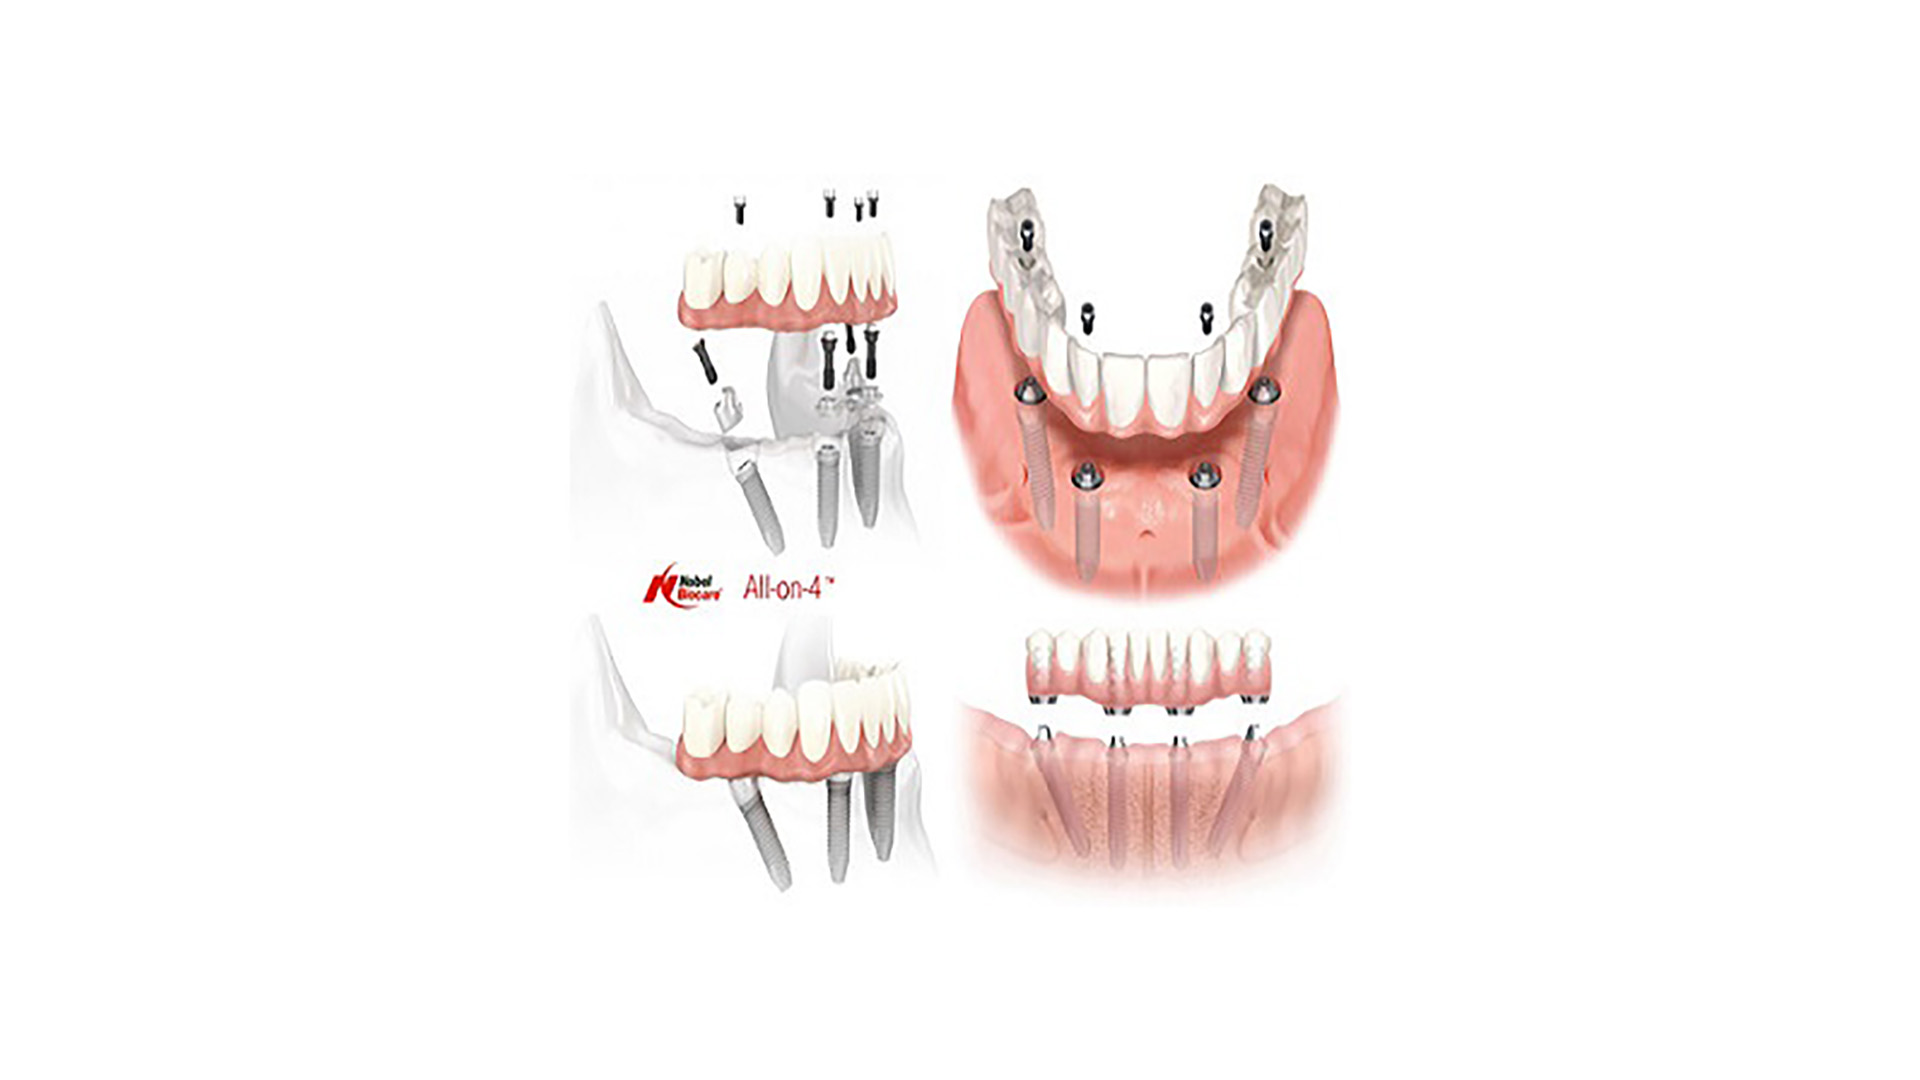 All-on-Four dental implants